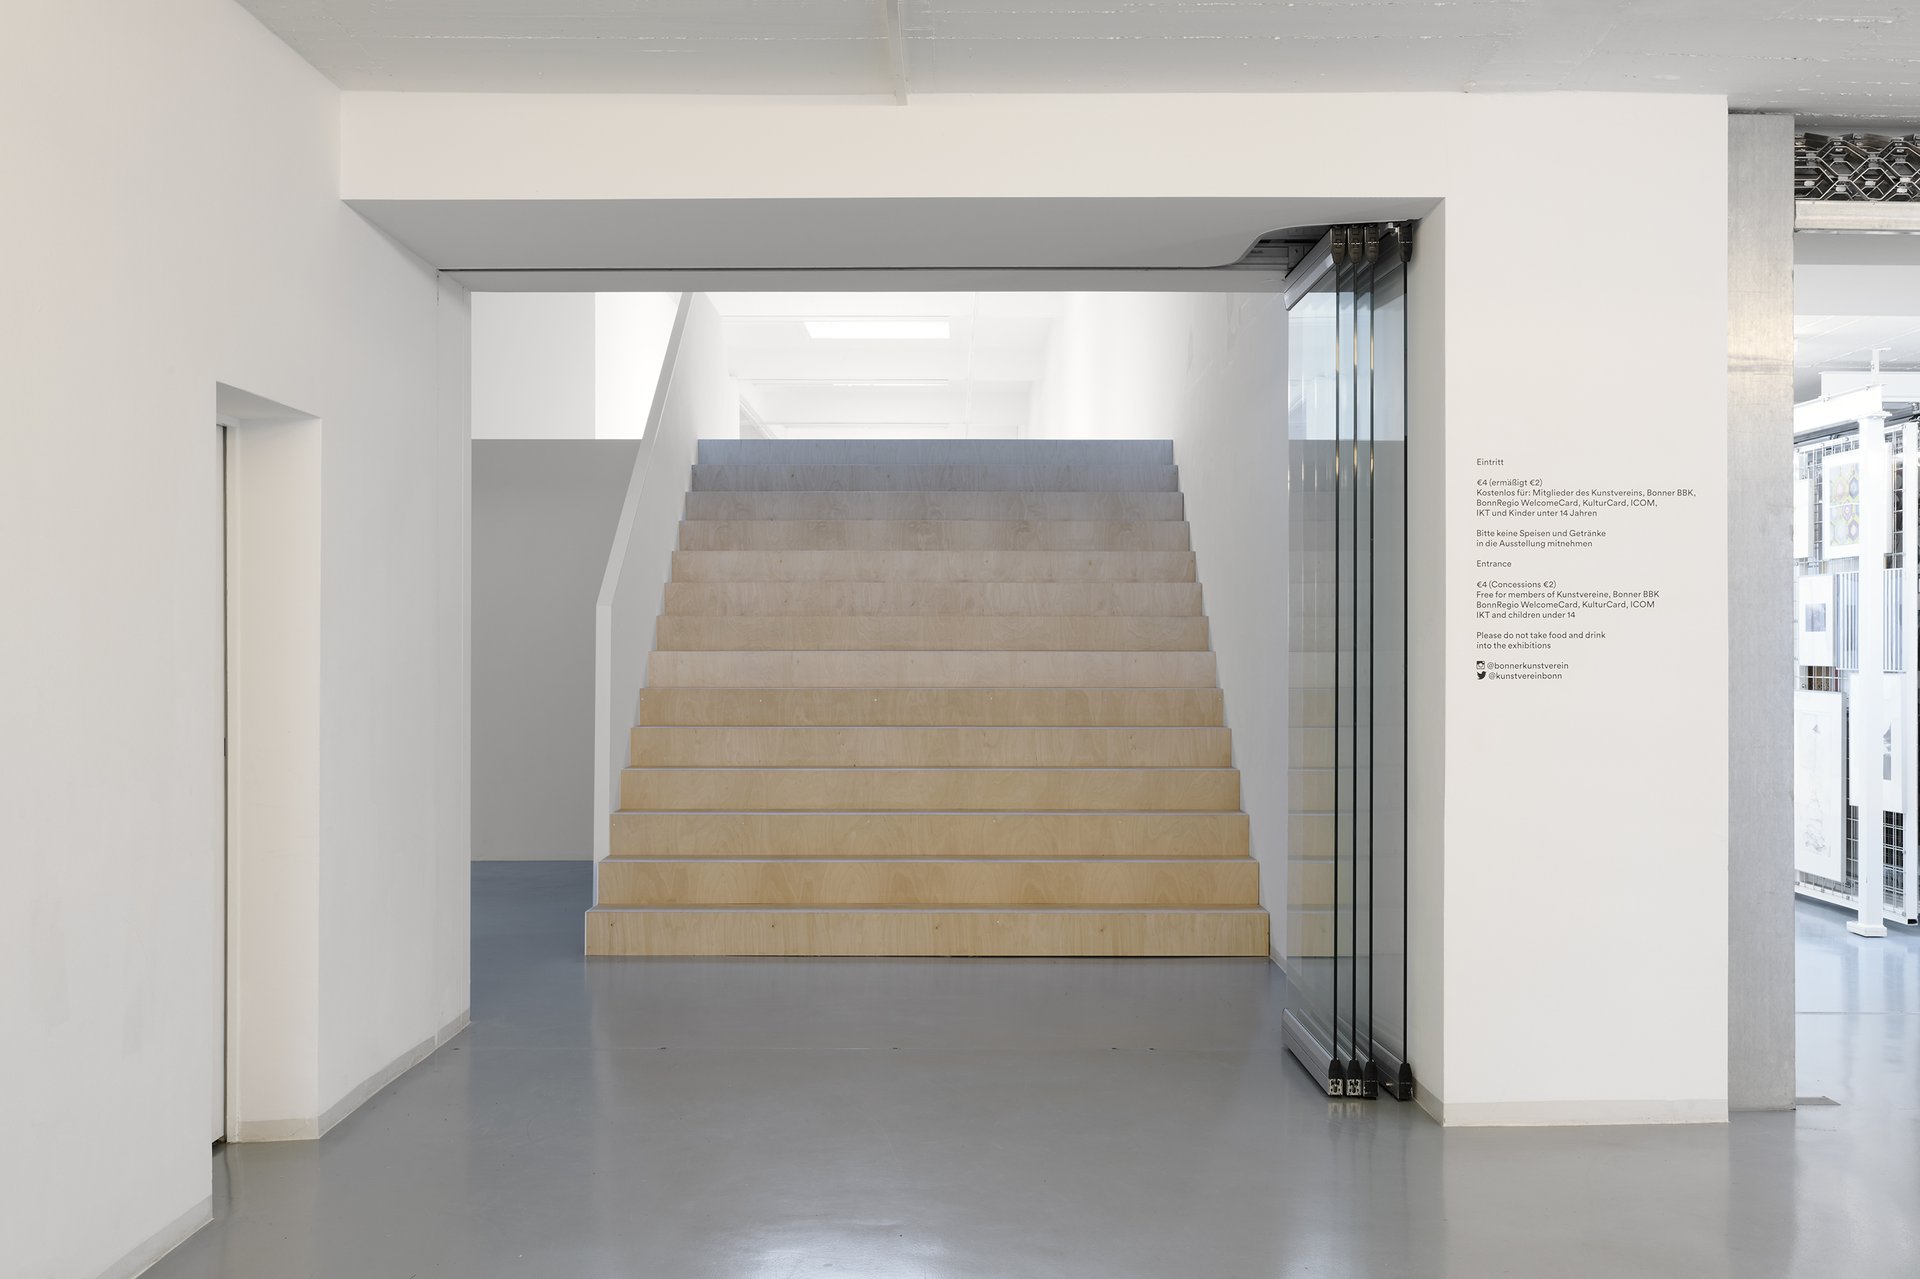 Michael Kleine, Treppe und Wand, 2021. Installation view: The Holding Environment, Bonner Kunstverein, 2021. Photo: Mareike Tocha. Courtesy of the artist.